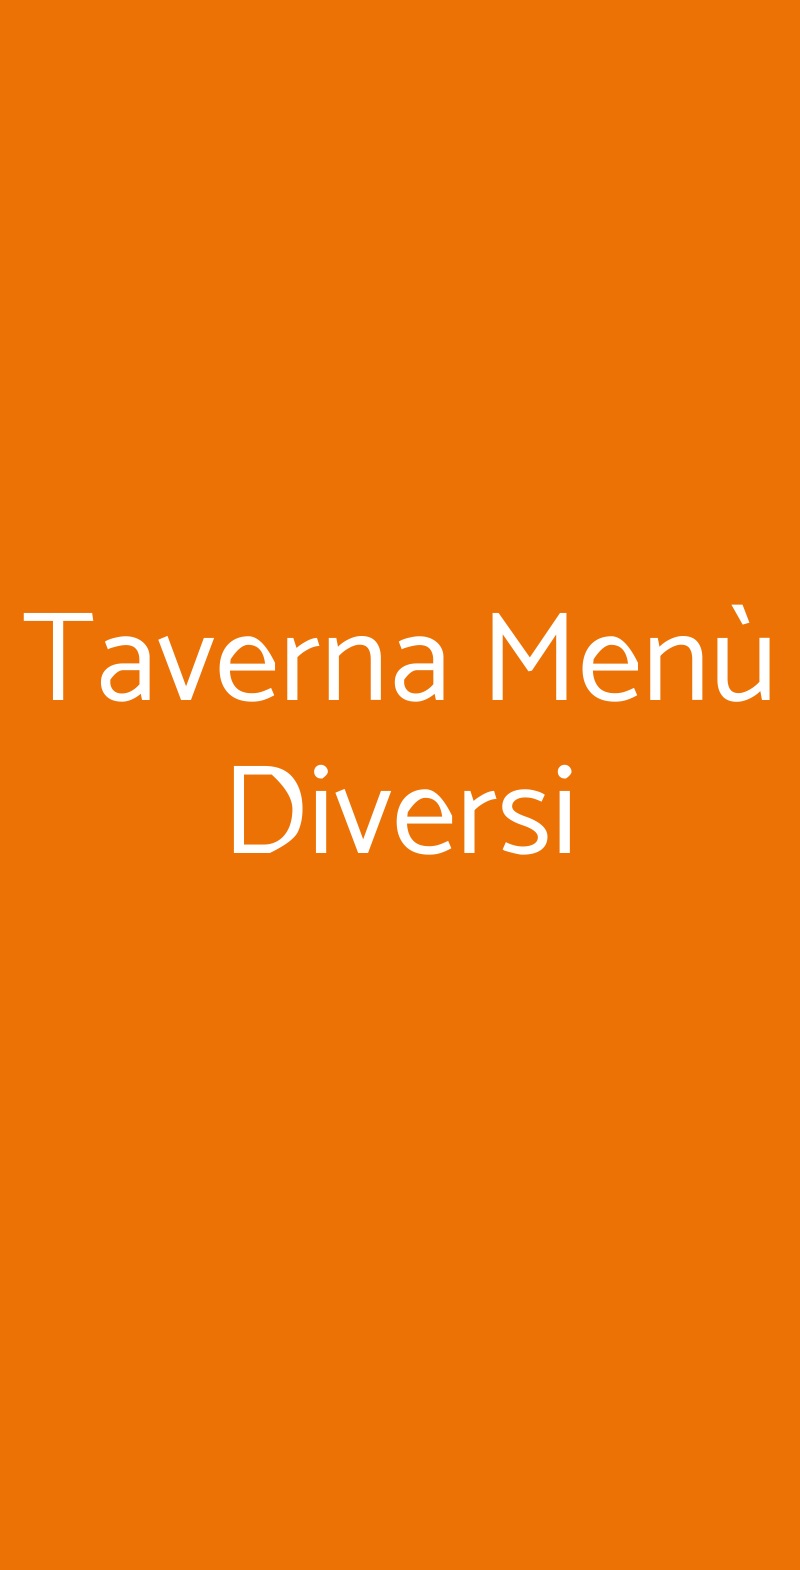 Taverna Menù Diversi Marino menù 1 pagina